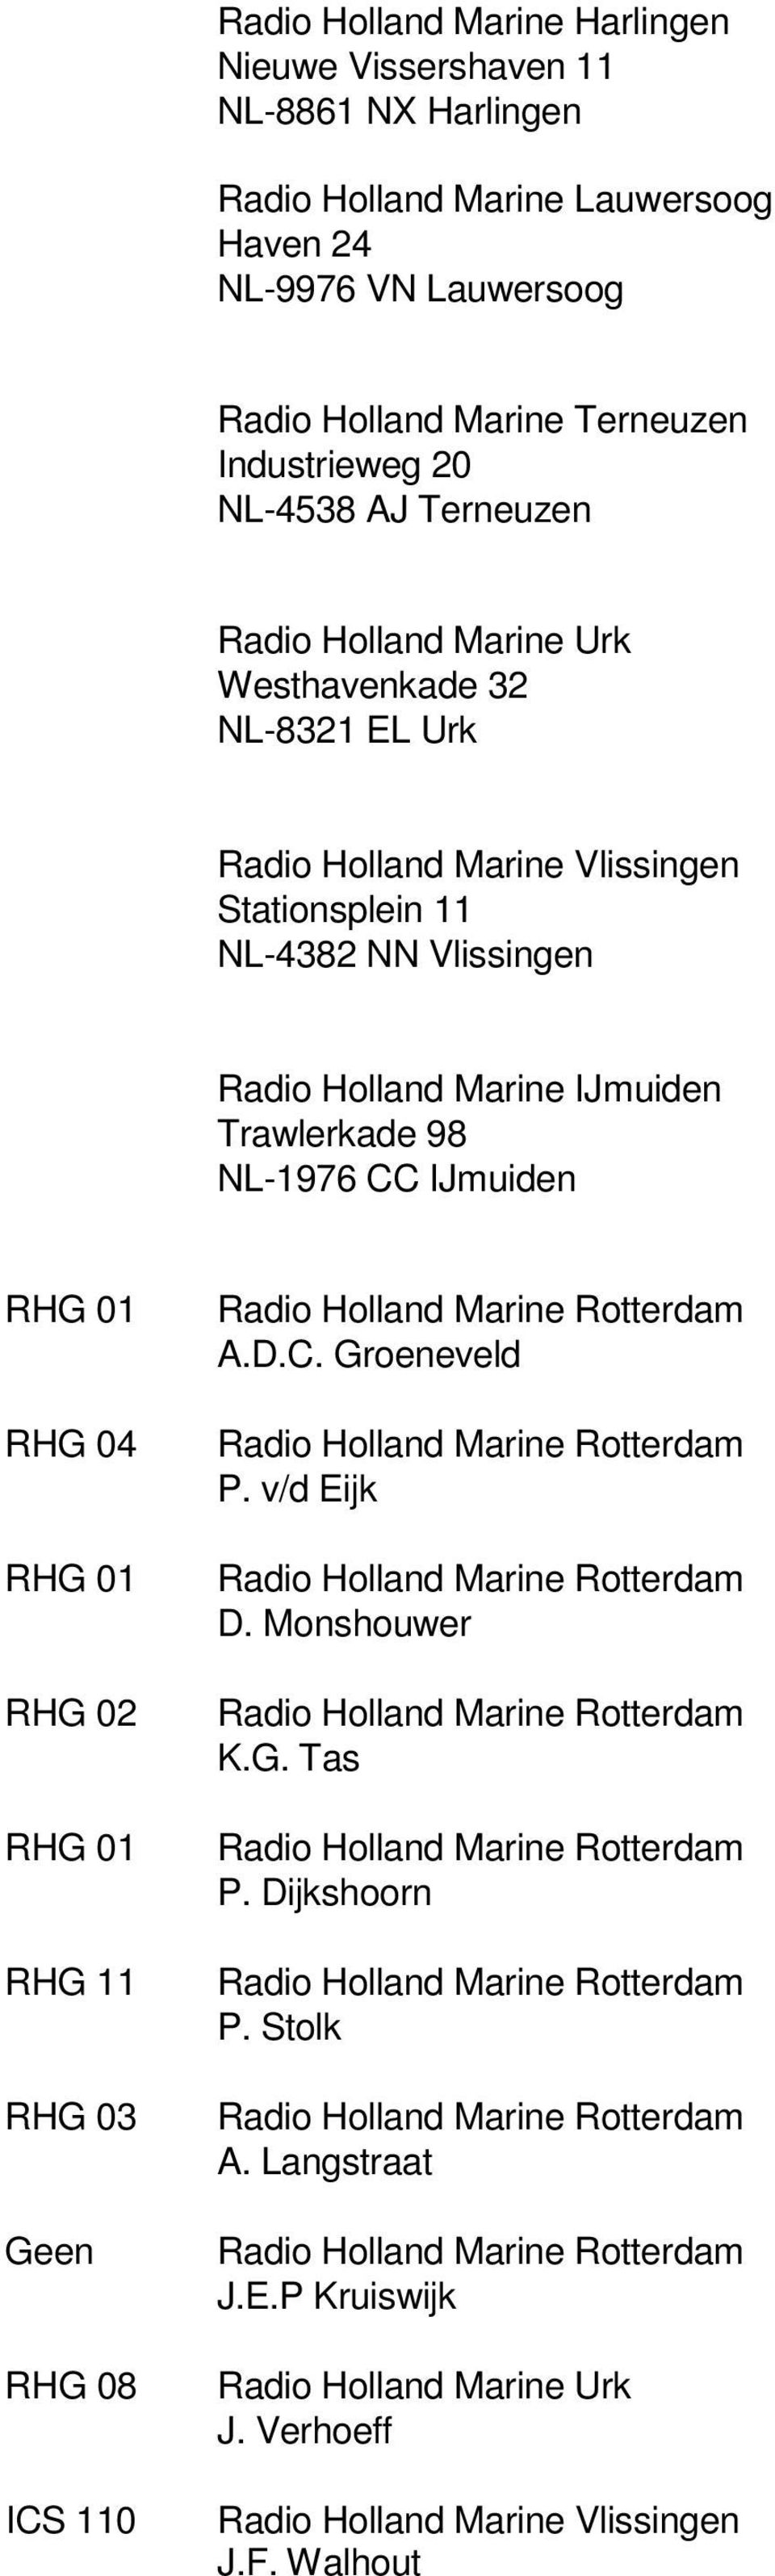 Vlissingen Radio Holland Marine IJmuiden Trawlerkade 98 NL-1976 CC IJmuiden RHG 01 RHG 04 RHG 01 RHG 02 RHG 01 RHG 11 RHG 03 Geen RHG 08 ICS 110 A.D.C. Groeneveld P.